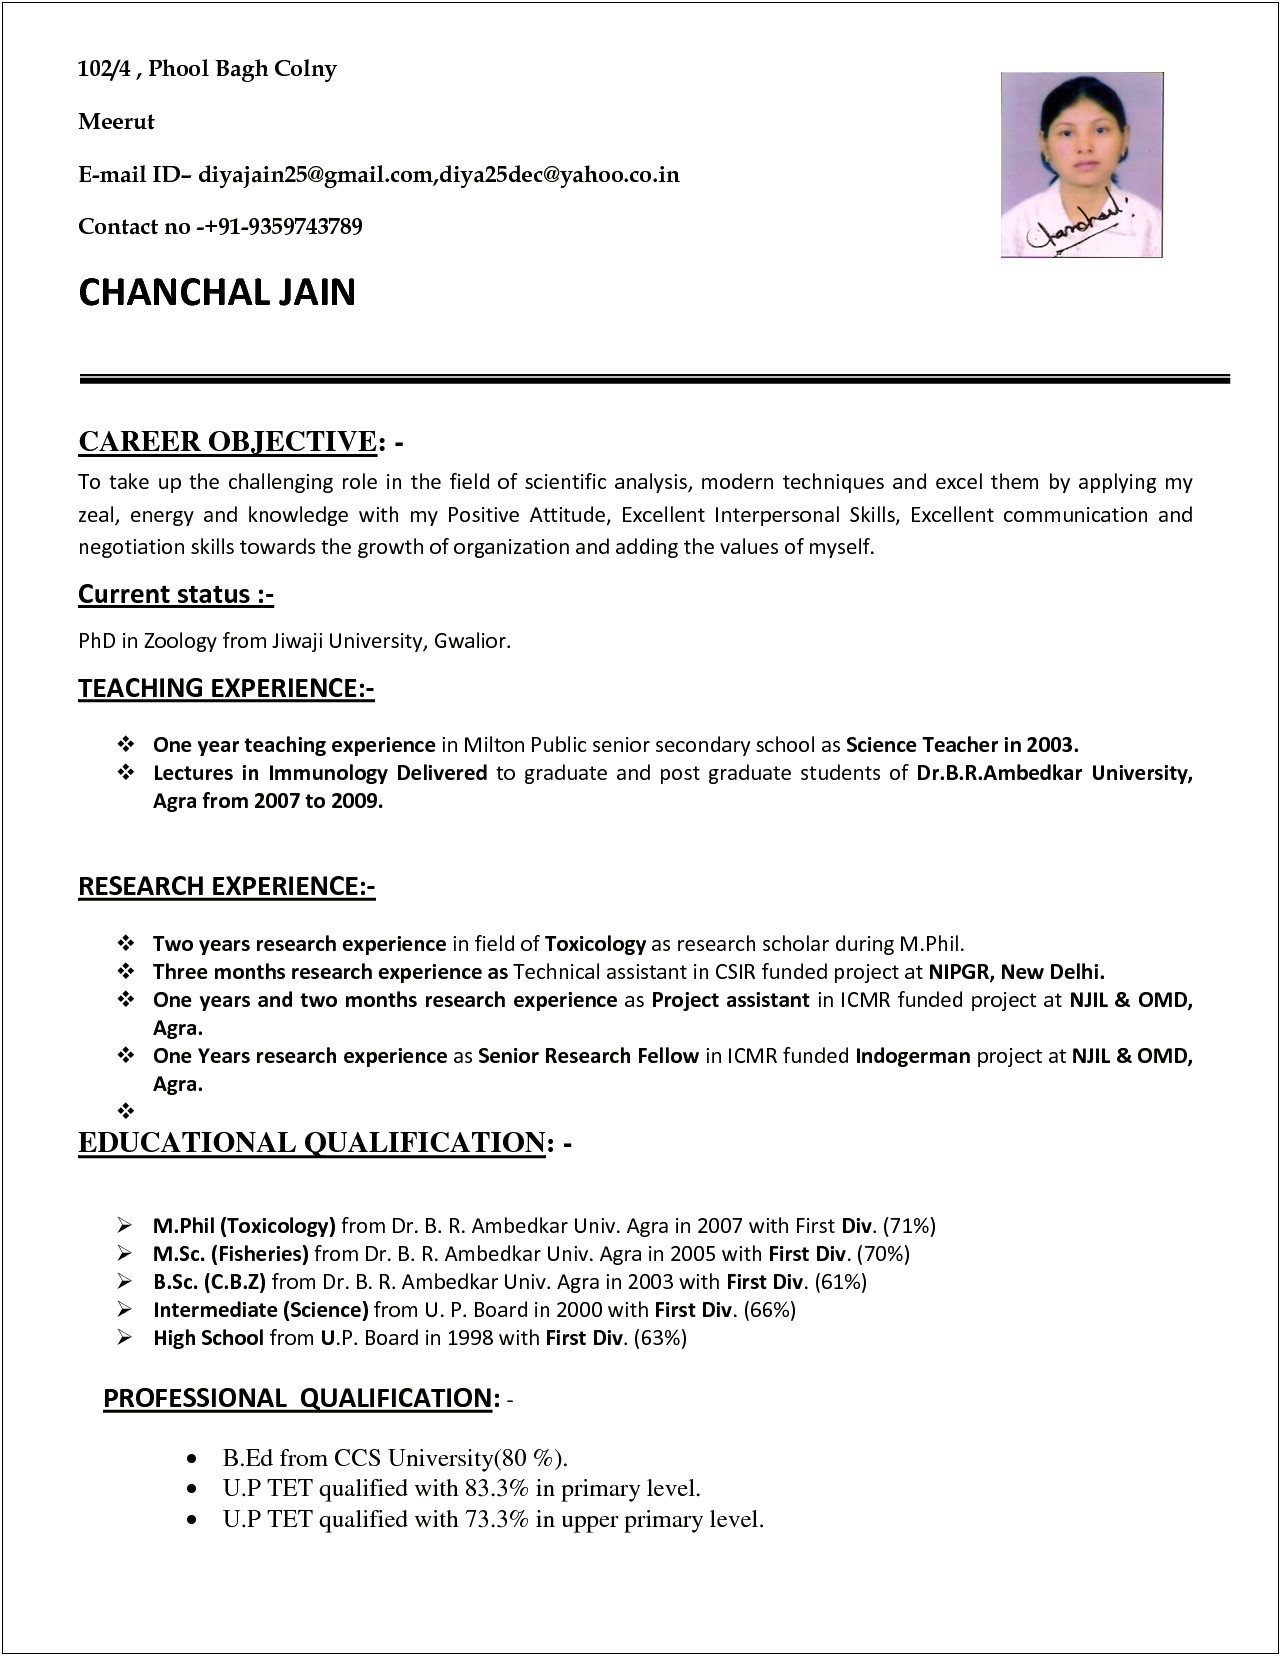 Resume For Teachers Job Application In India